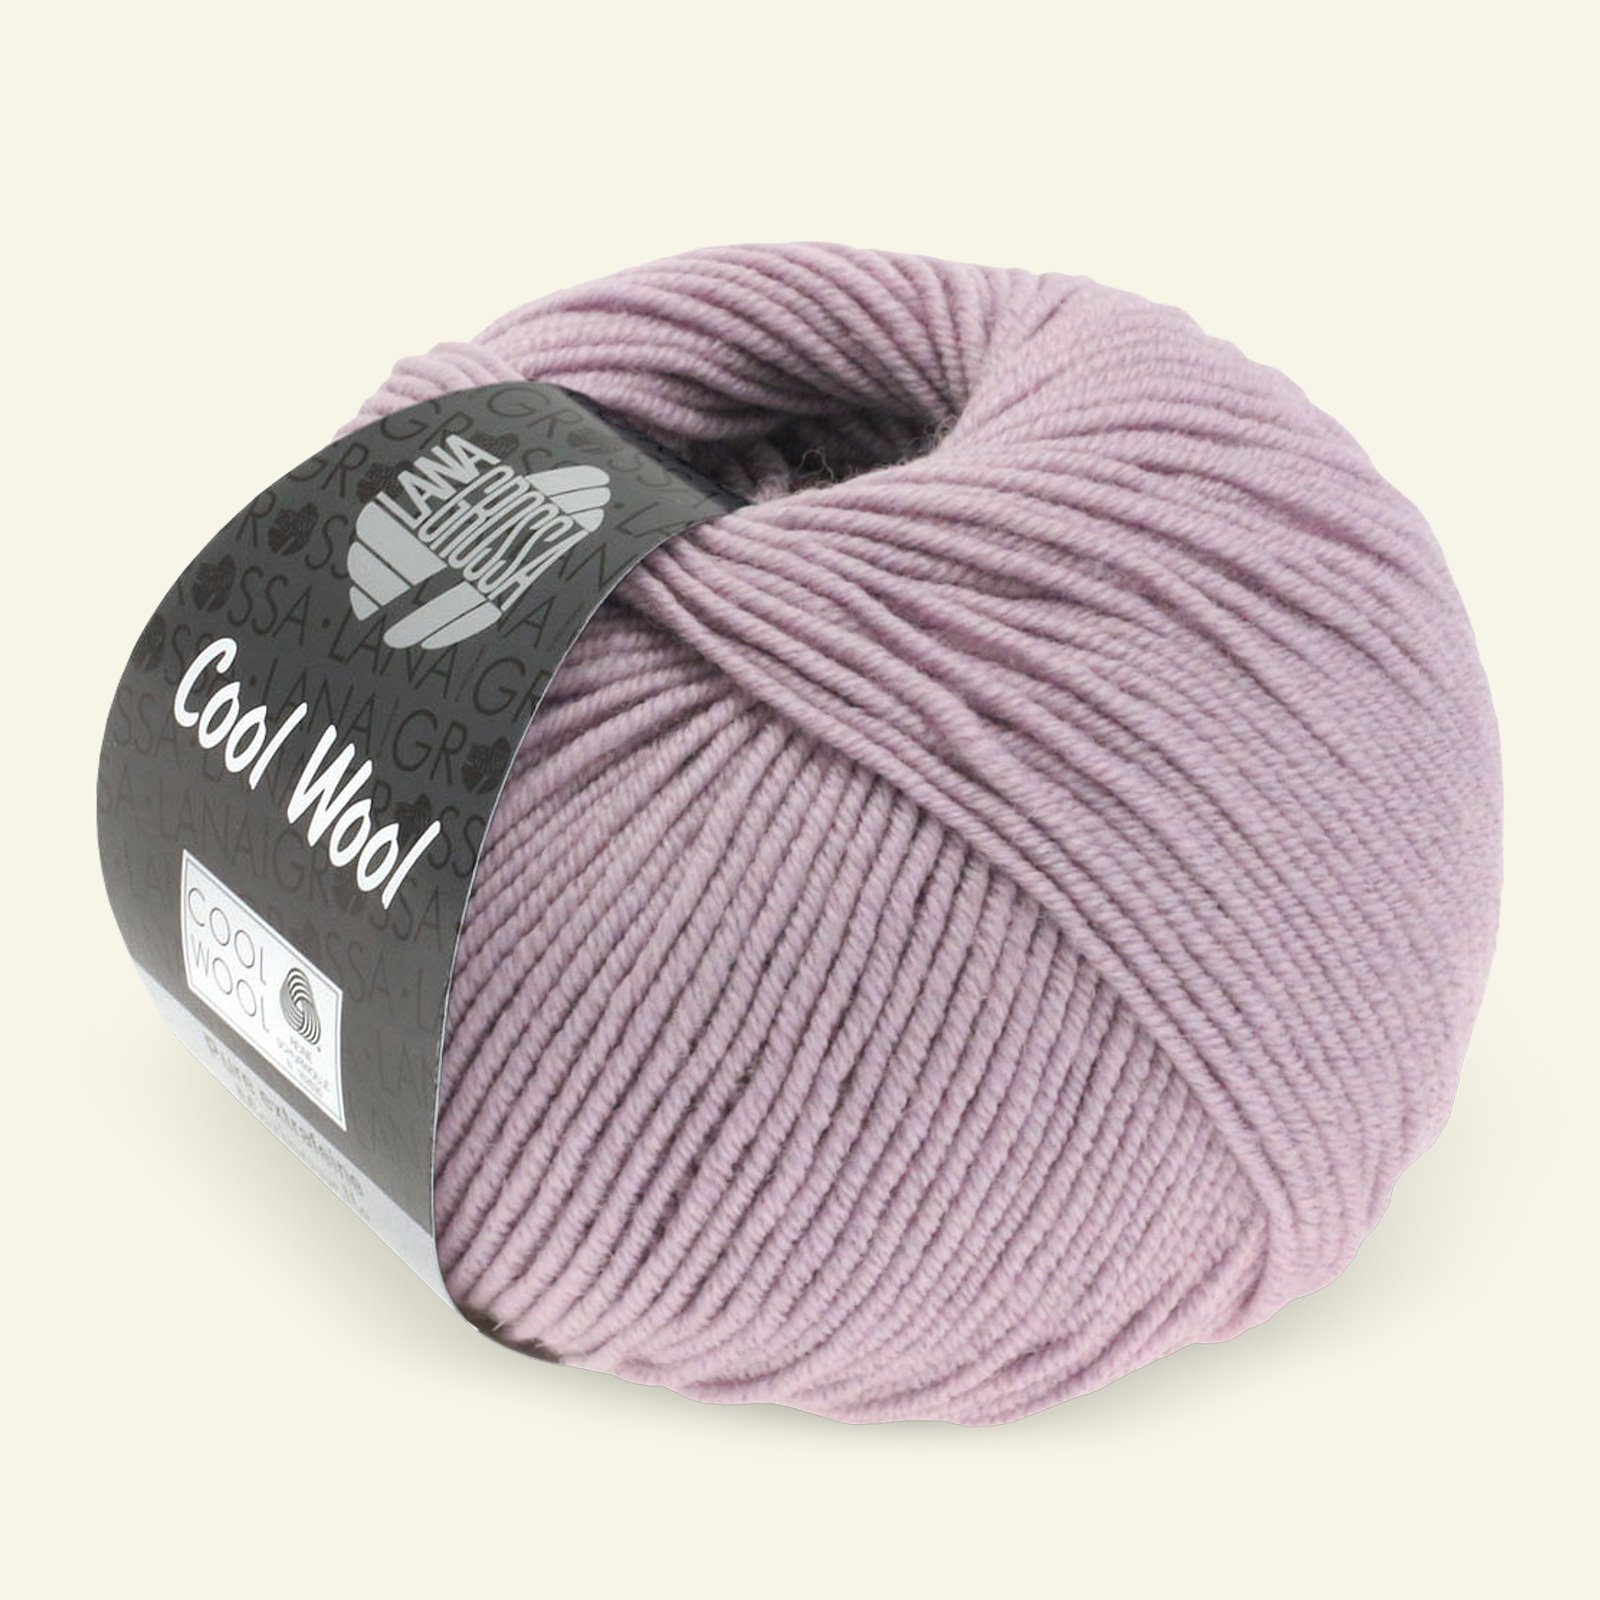 Lana Grossa, extrafine merino wool yarn "Cool Wool", dusty rose 90001120_pack